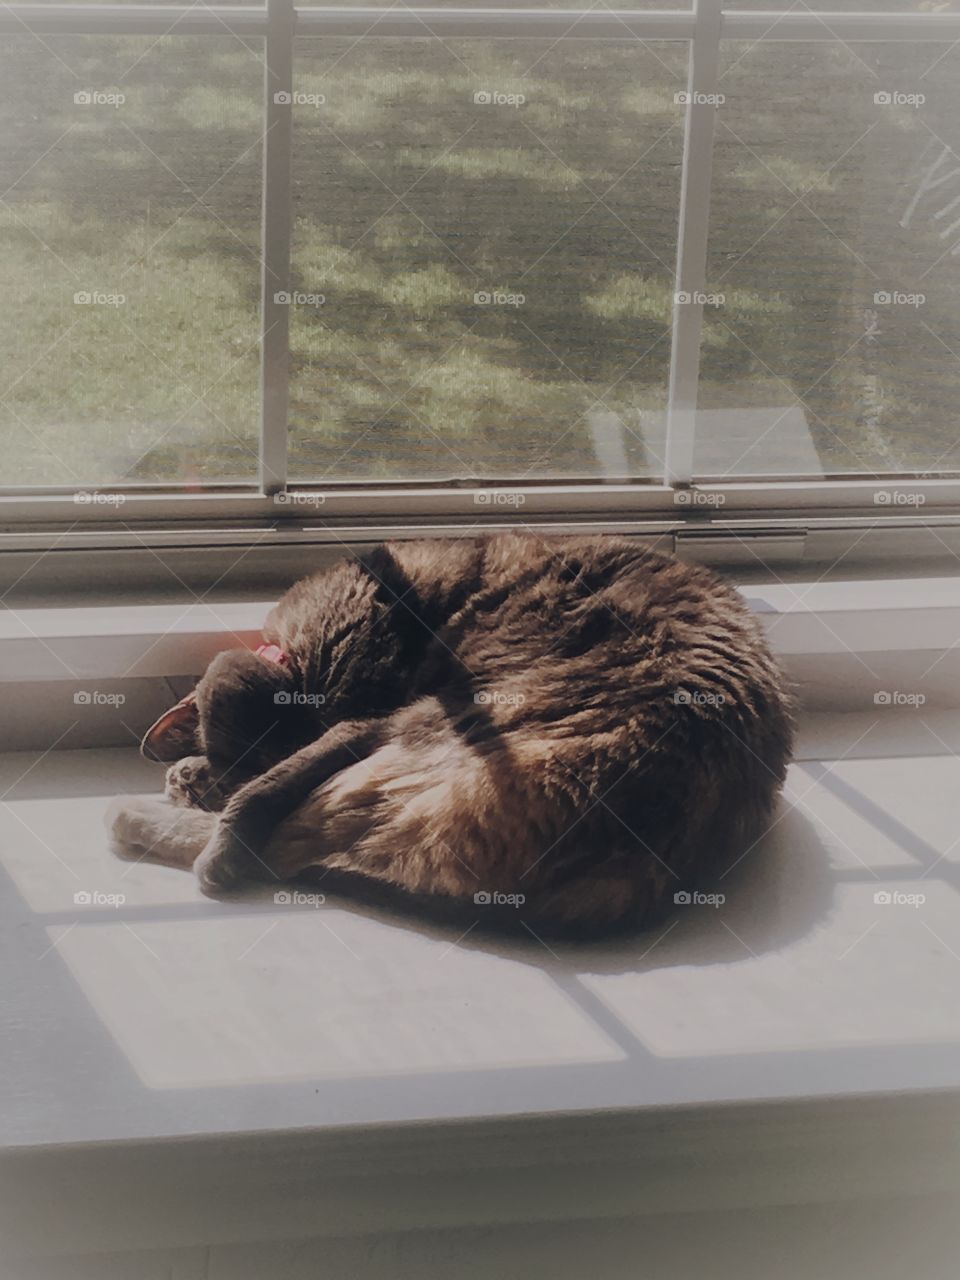 Kitty sleeping in the warm sunlight of a window. 